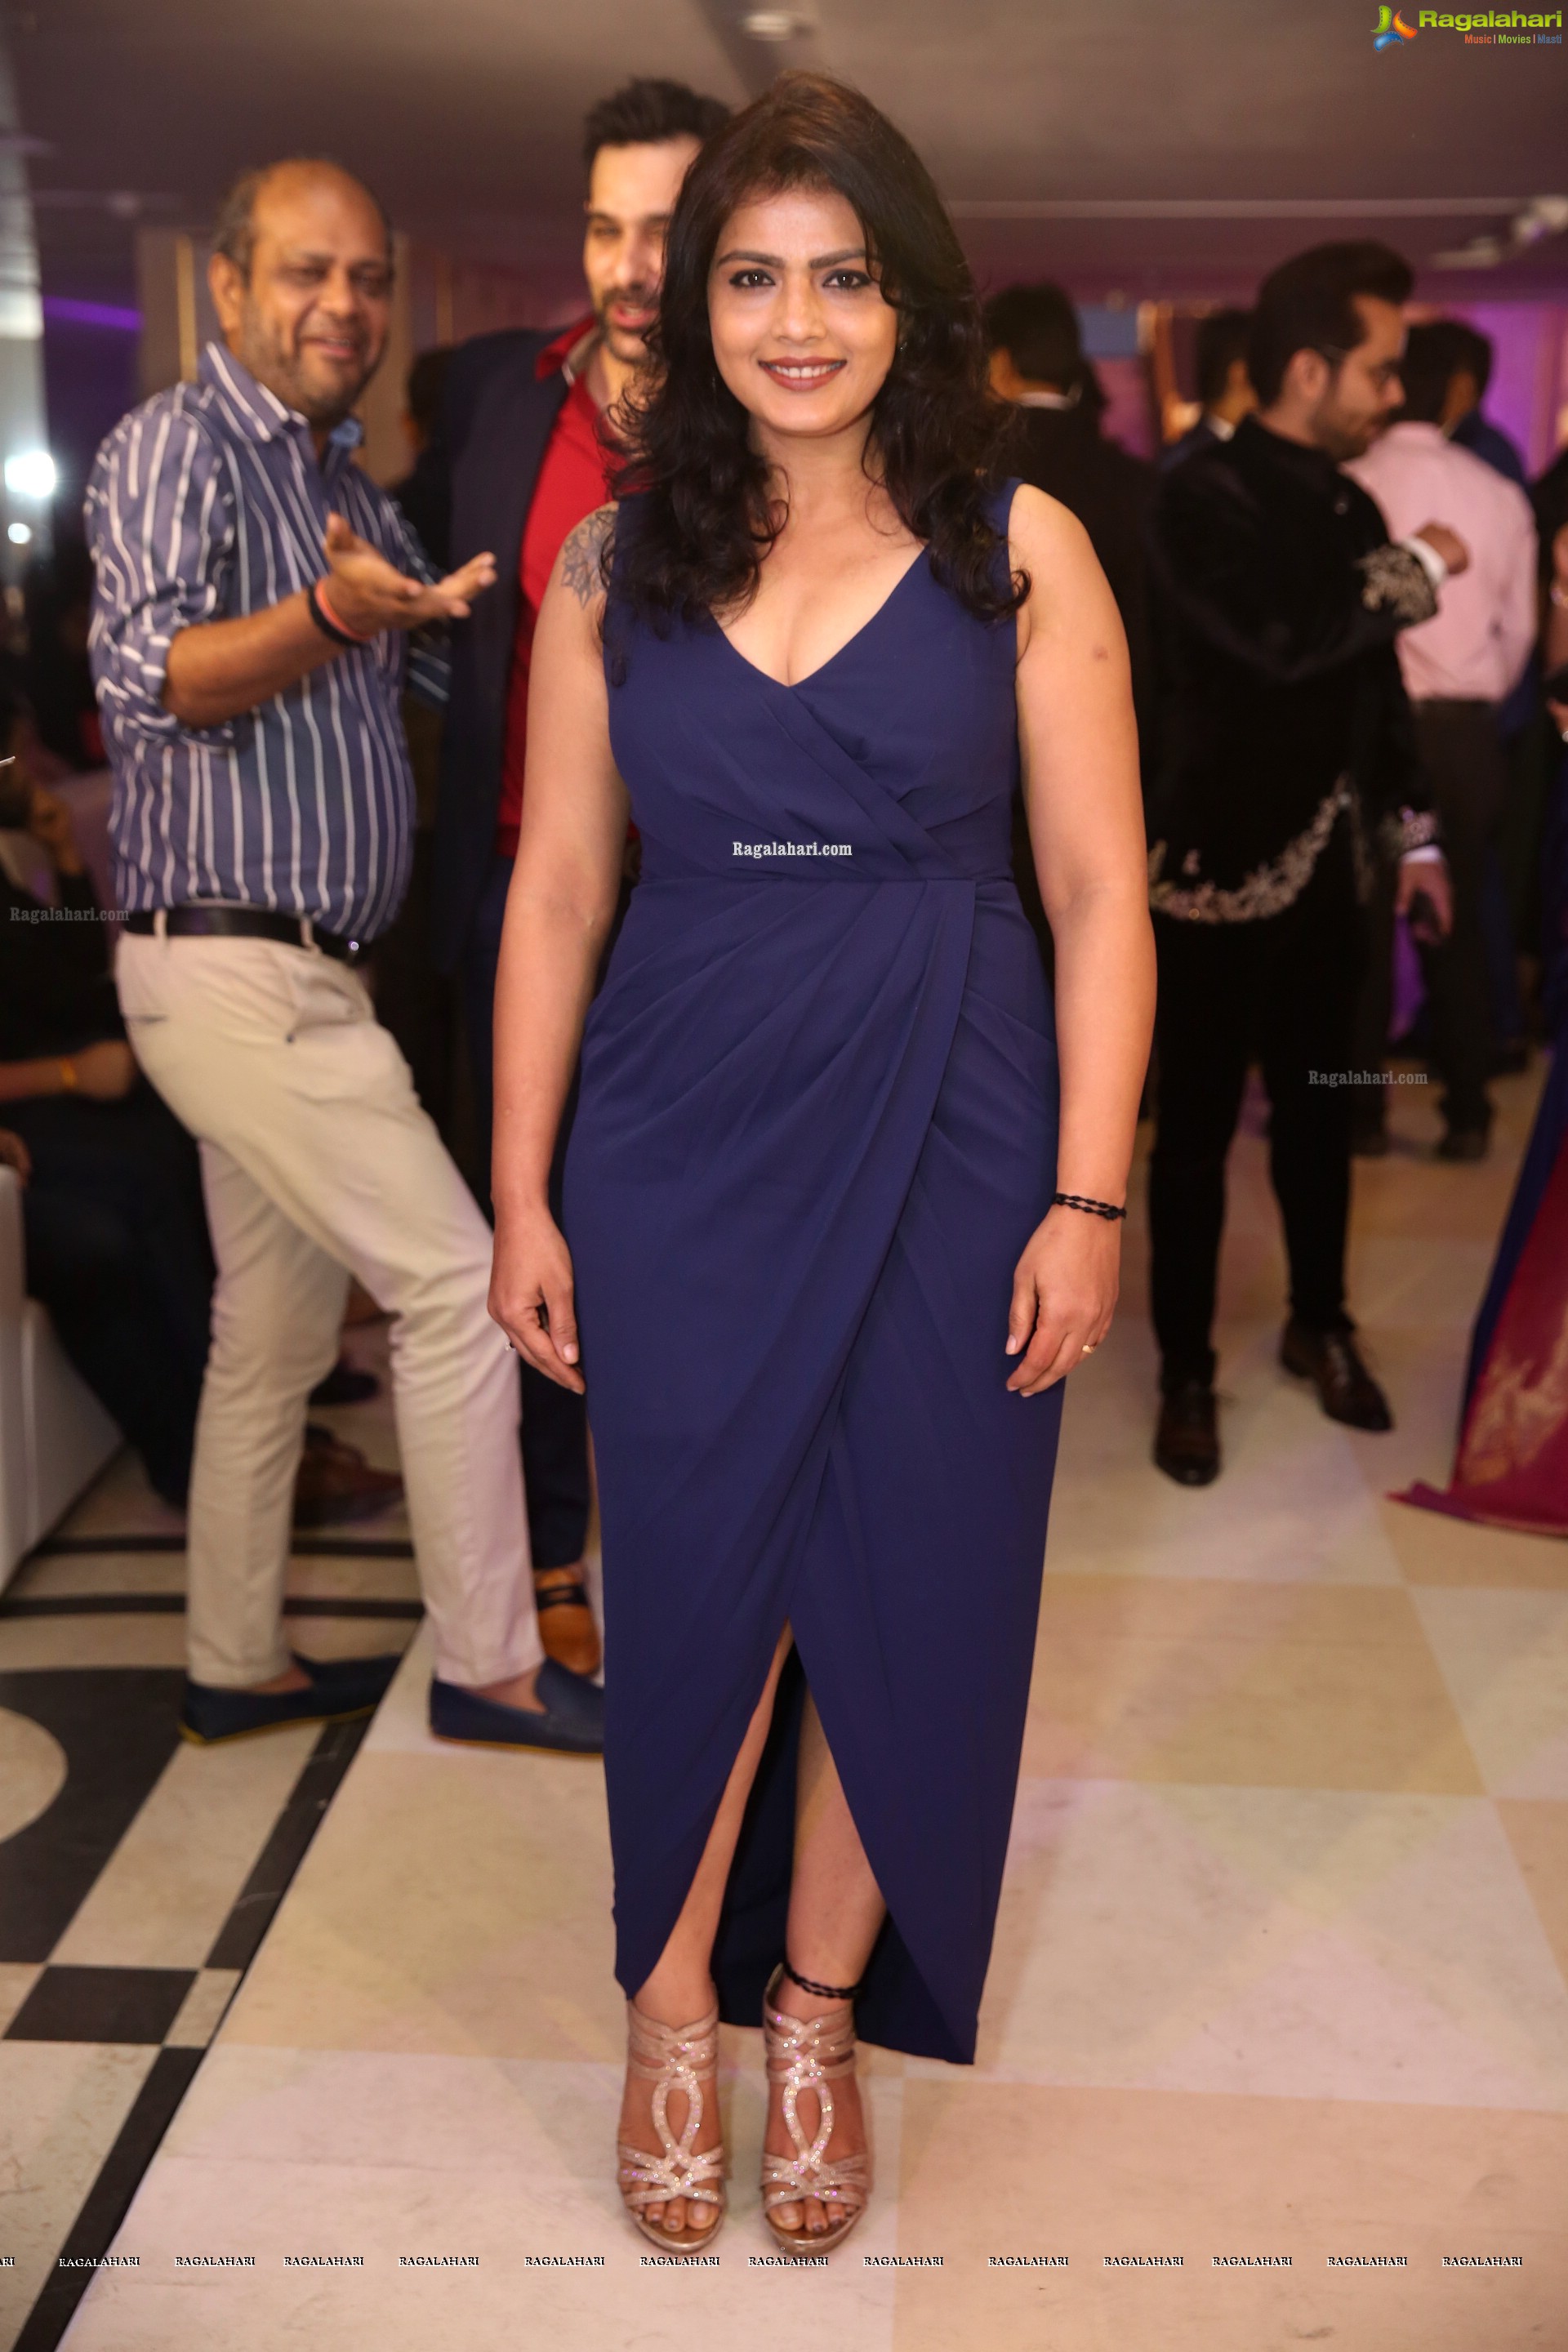 Neeru’s Hosts The Winter Fashion Show, Sonam Kapoor Walks The Ramp